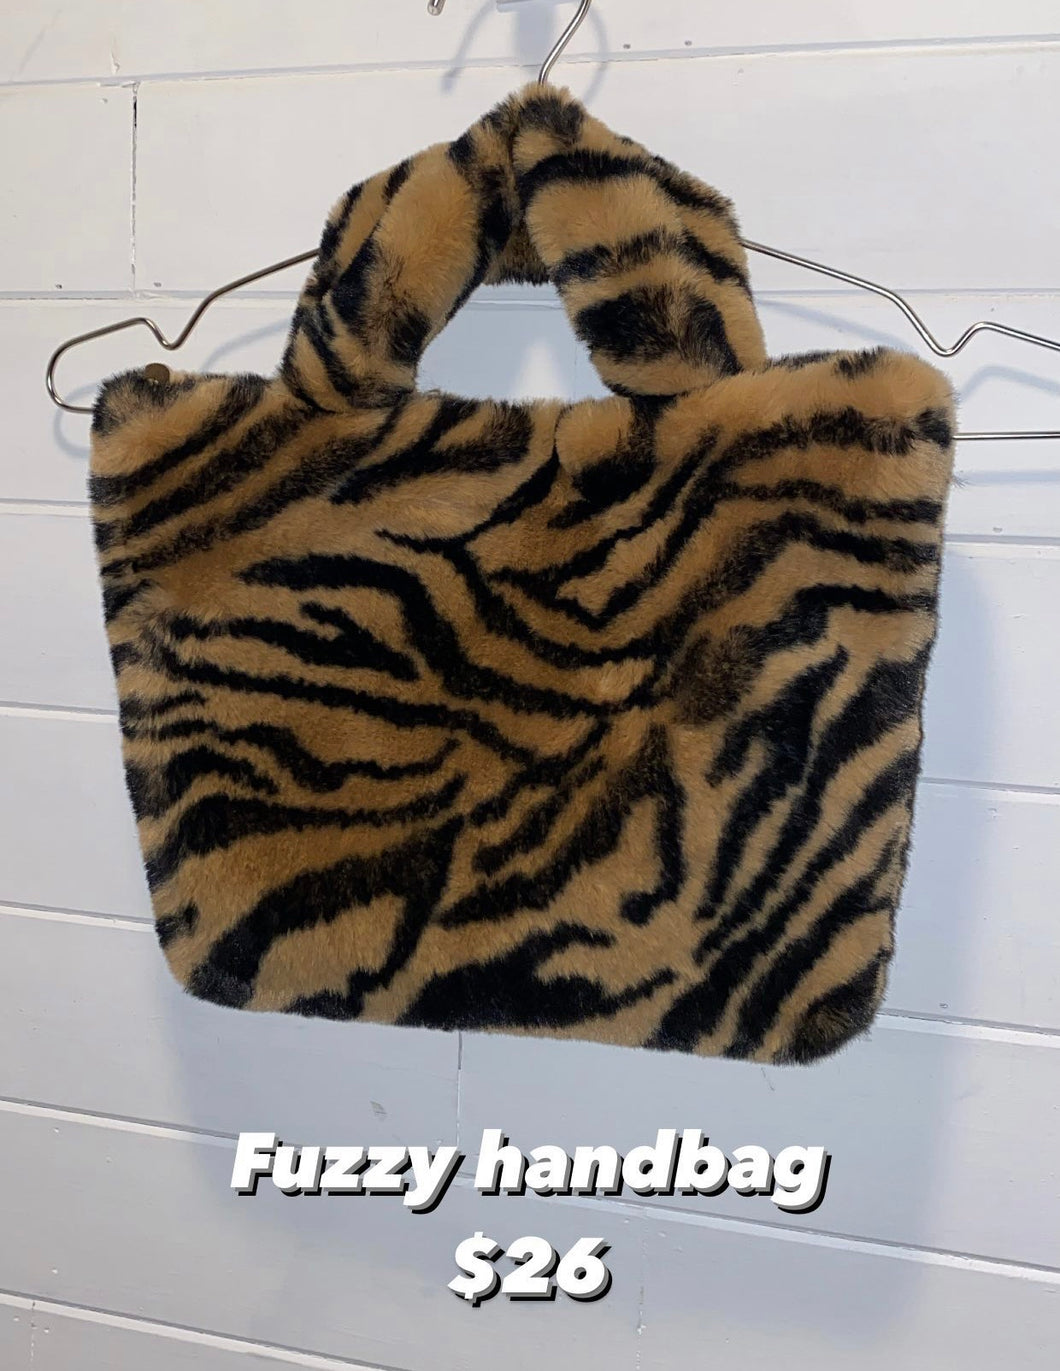 Fuzzy hand bag